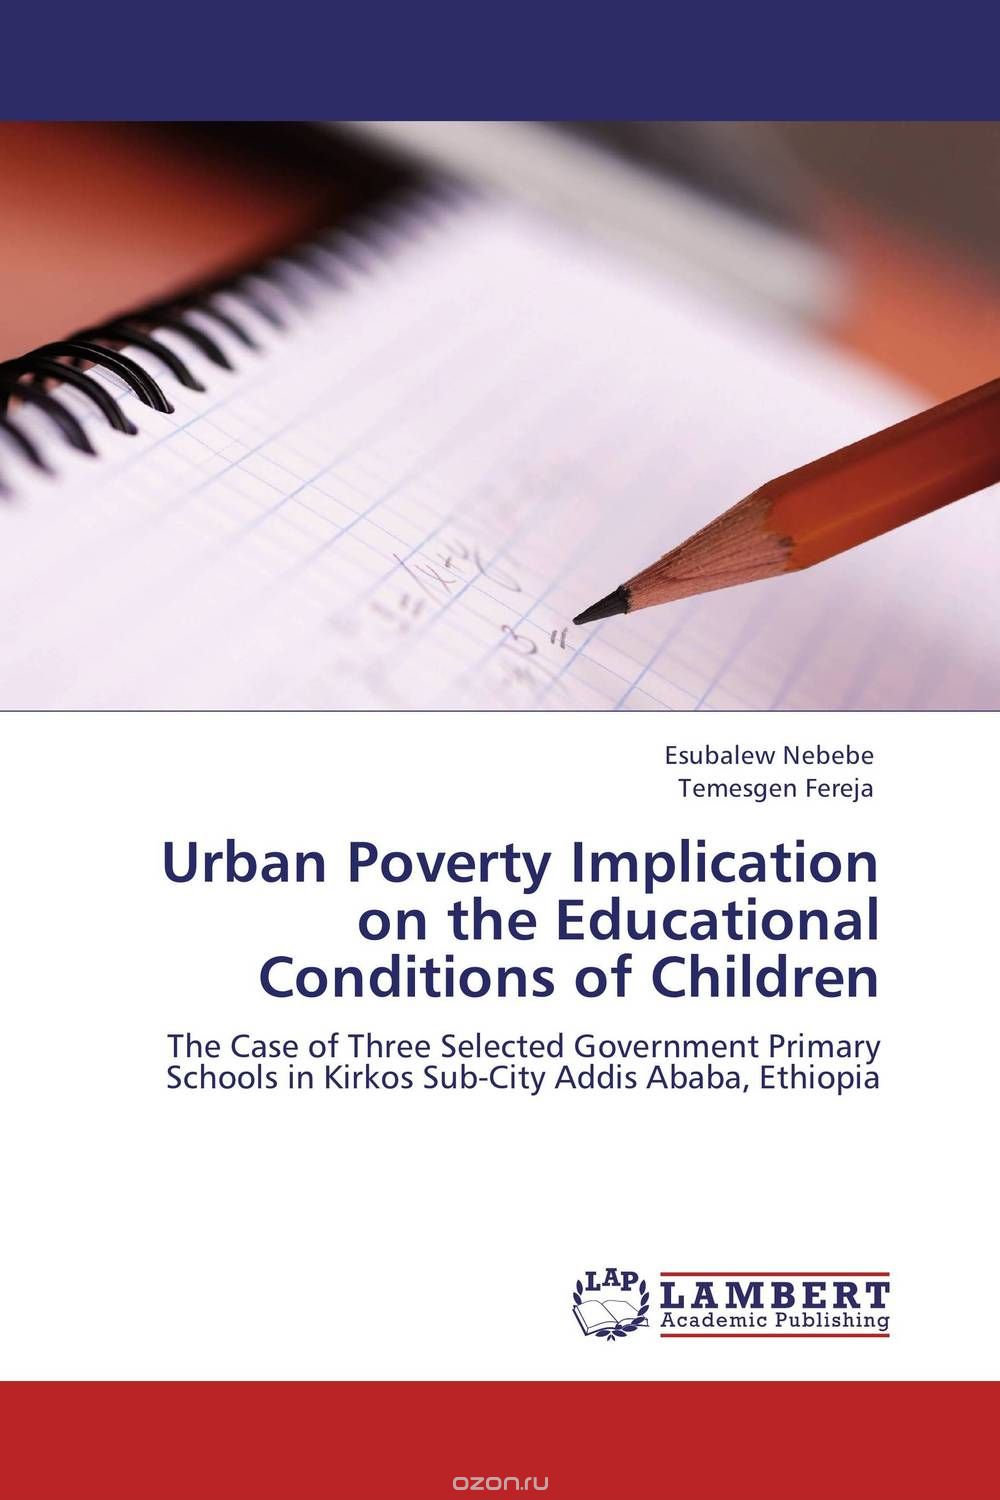 Скачать книгу "Urban Poverty Implication on the Educational Conditions of Children"